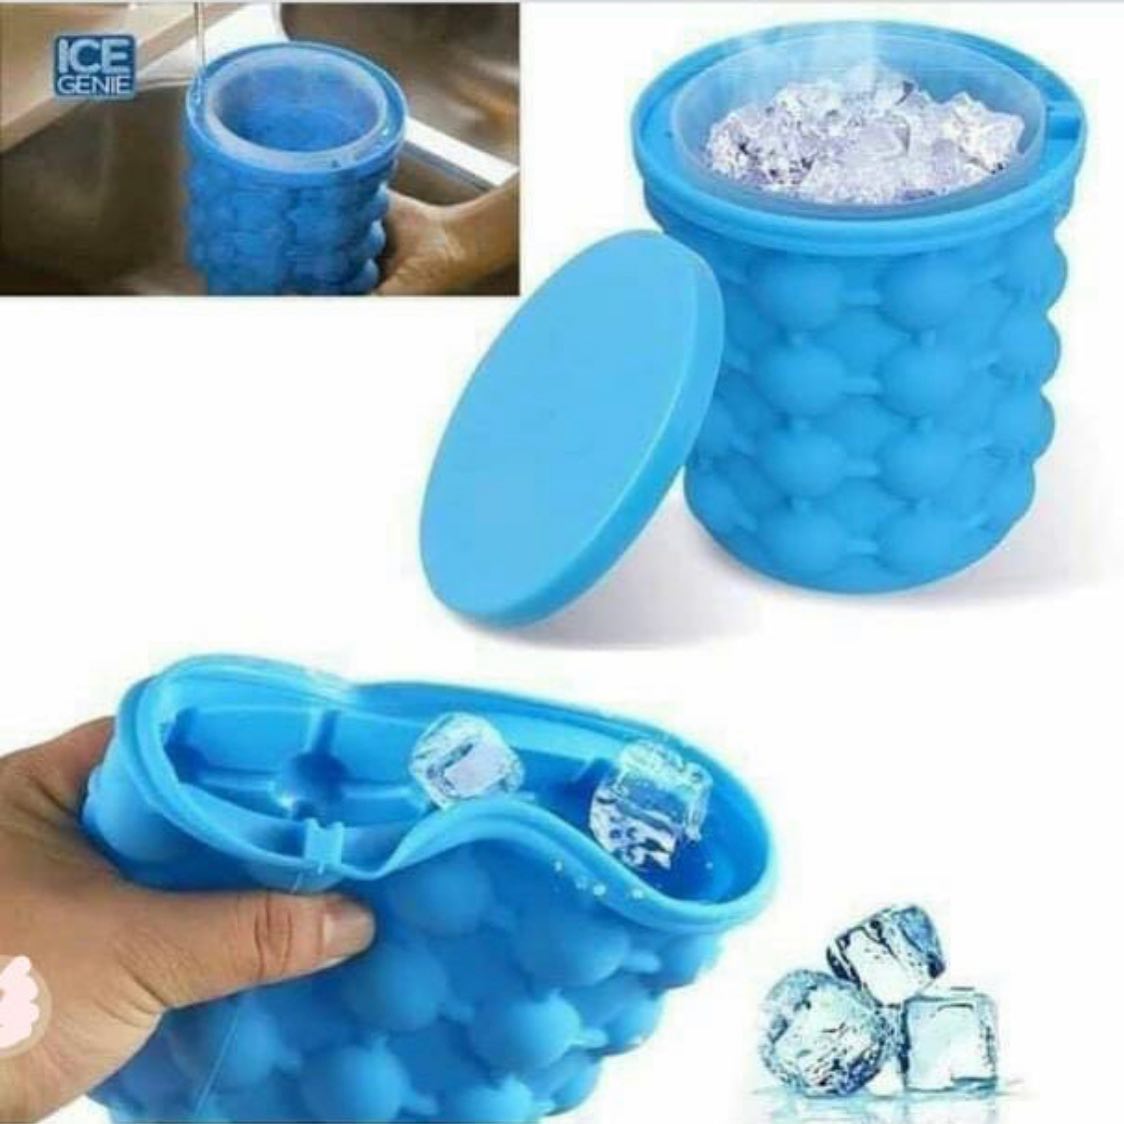 Magic Ice Cube Maker Genie Silicone Rubber Ice Tray Mold